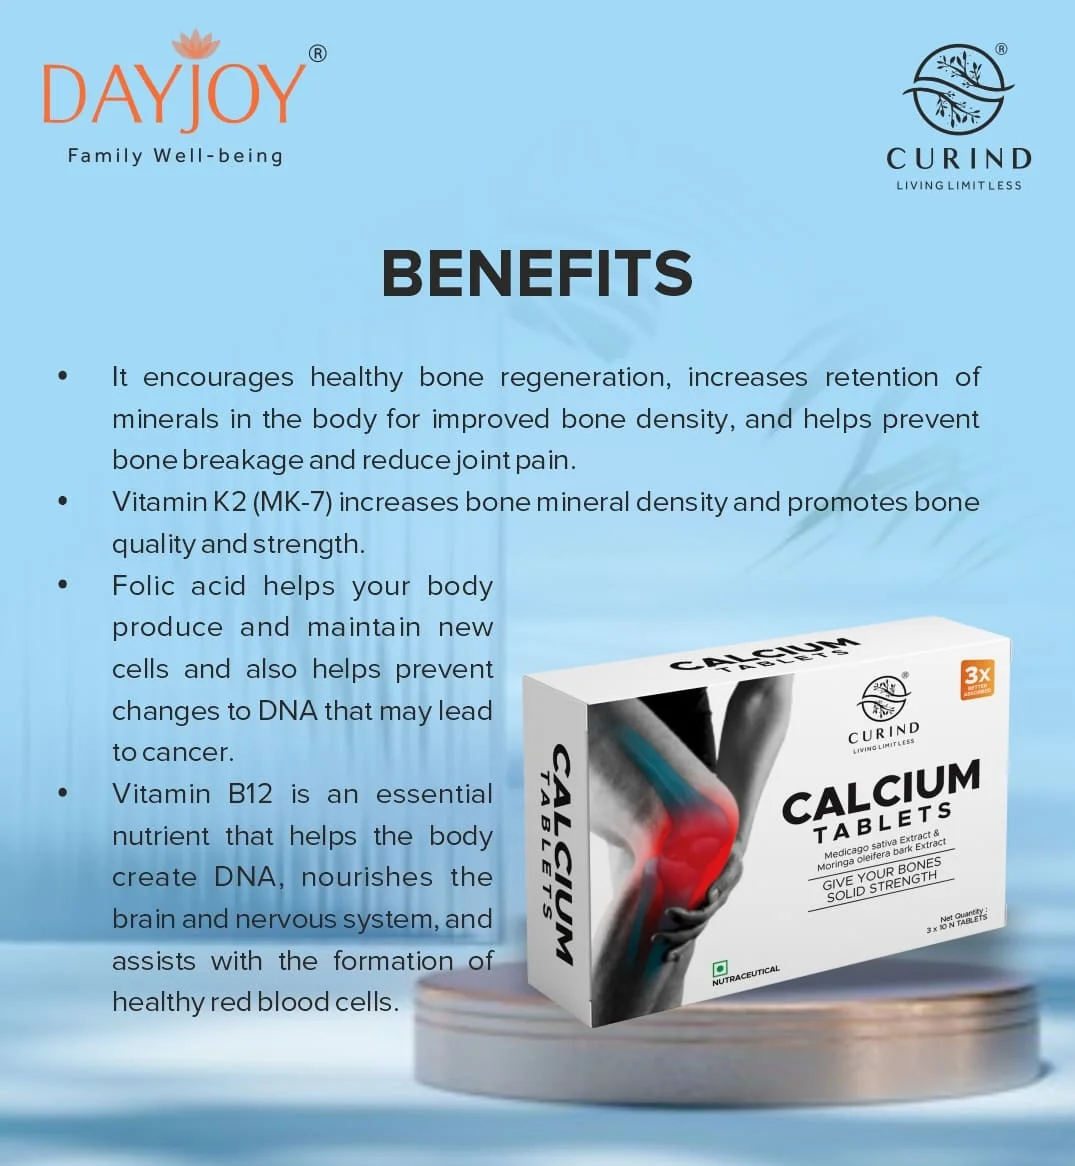 Advanced Calcium Tablets- best medicine for bone strength